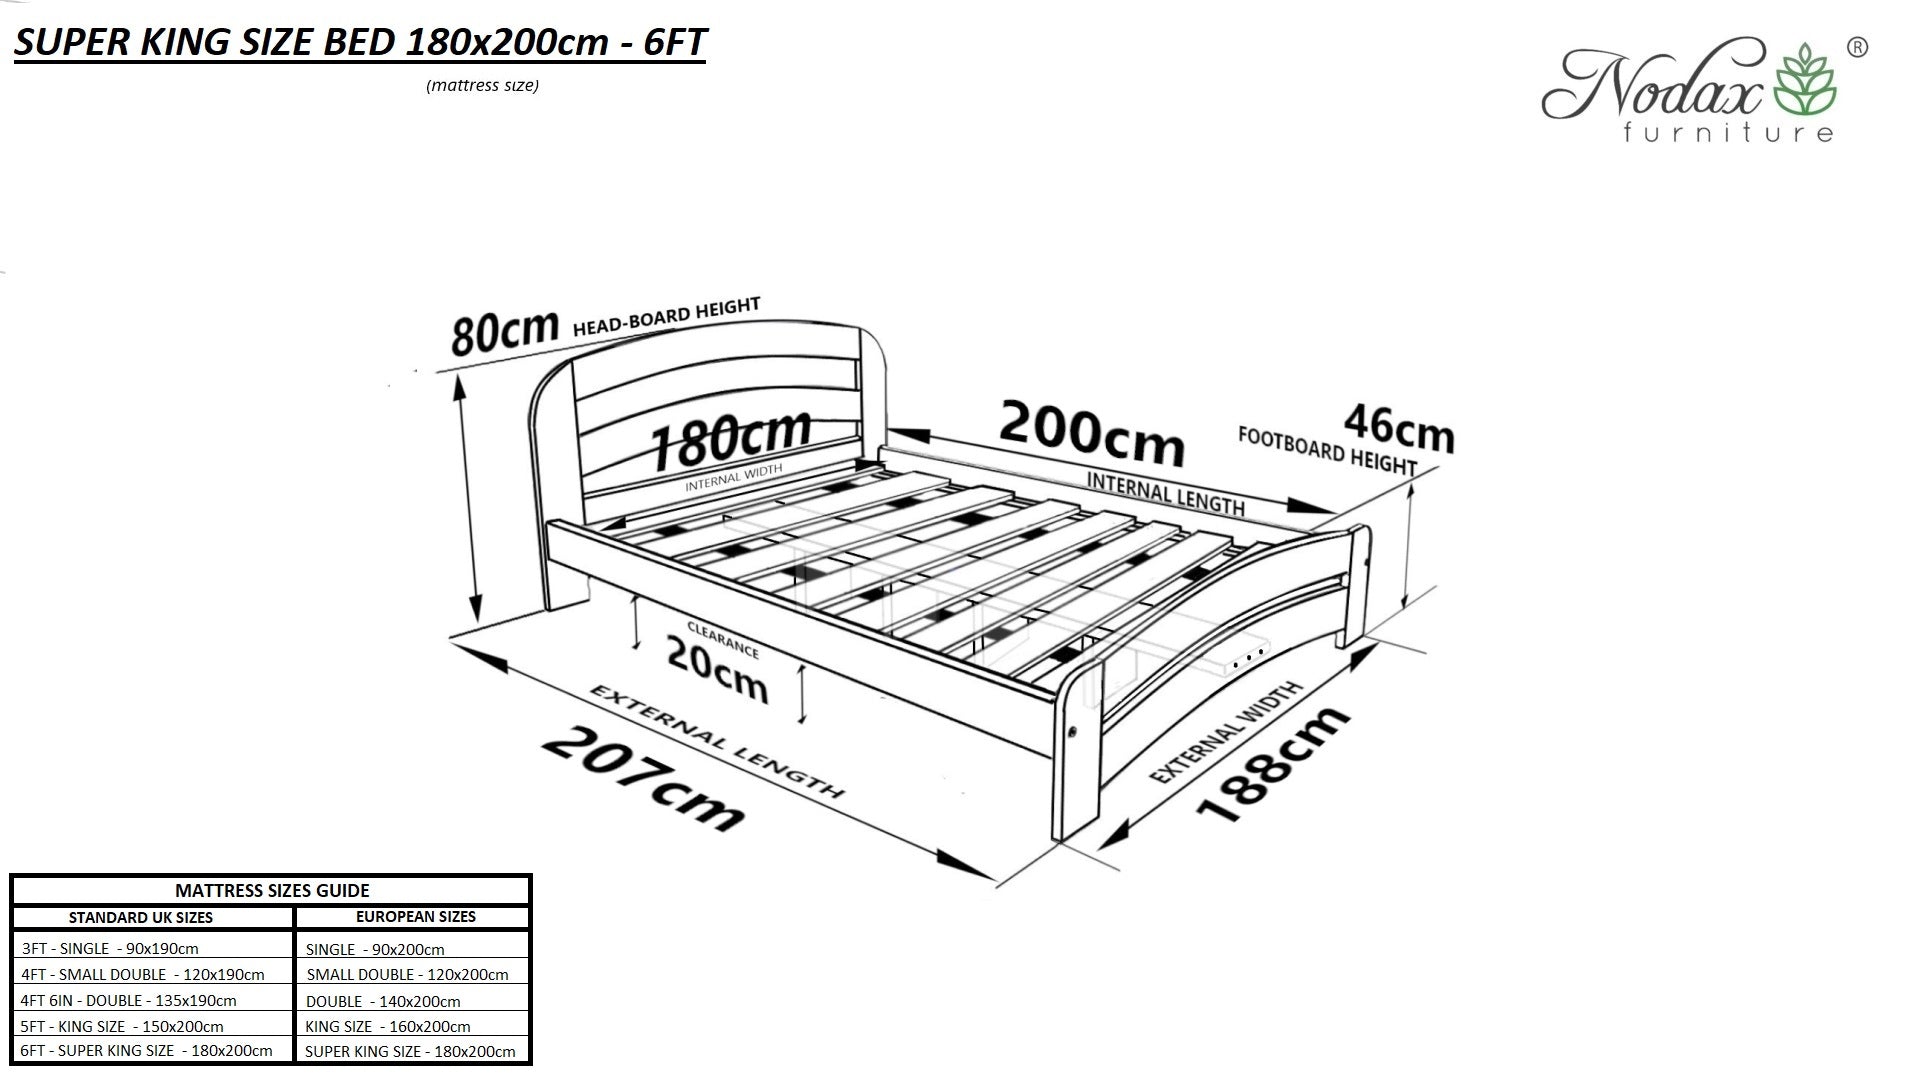 Wooden-bed-frame-dimensions-6ft